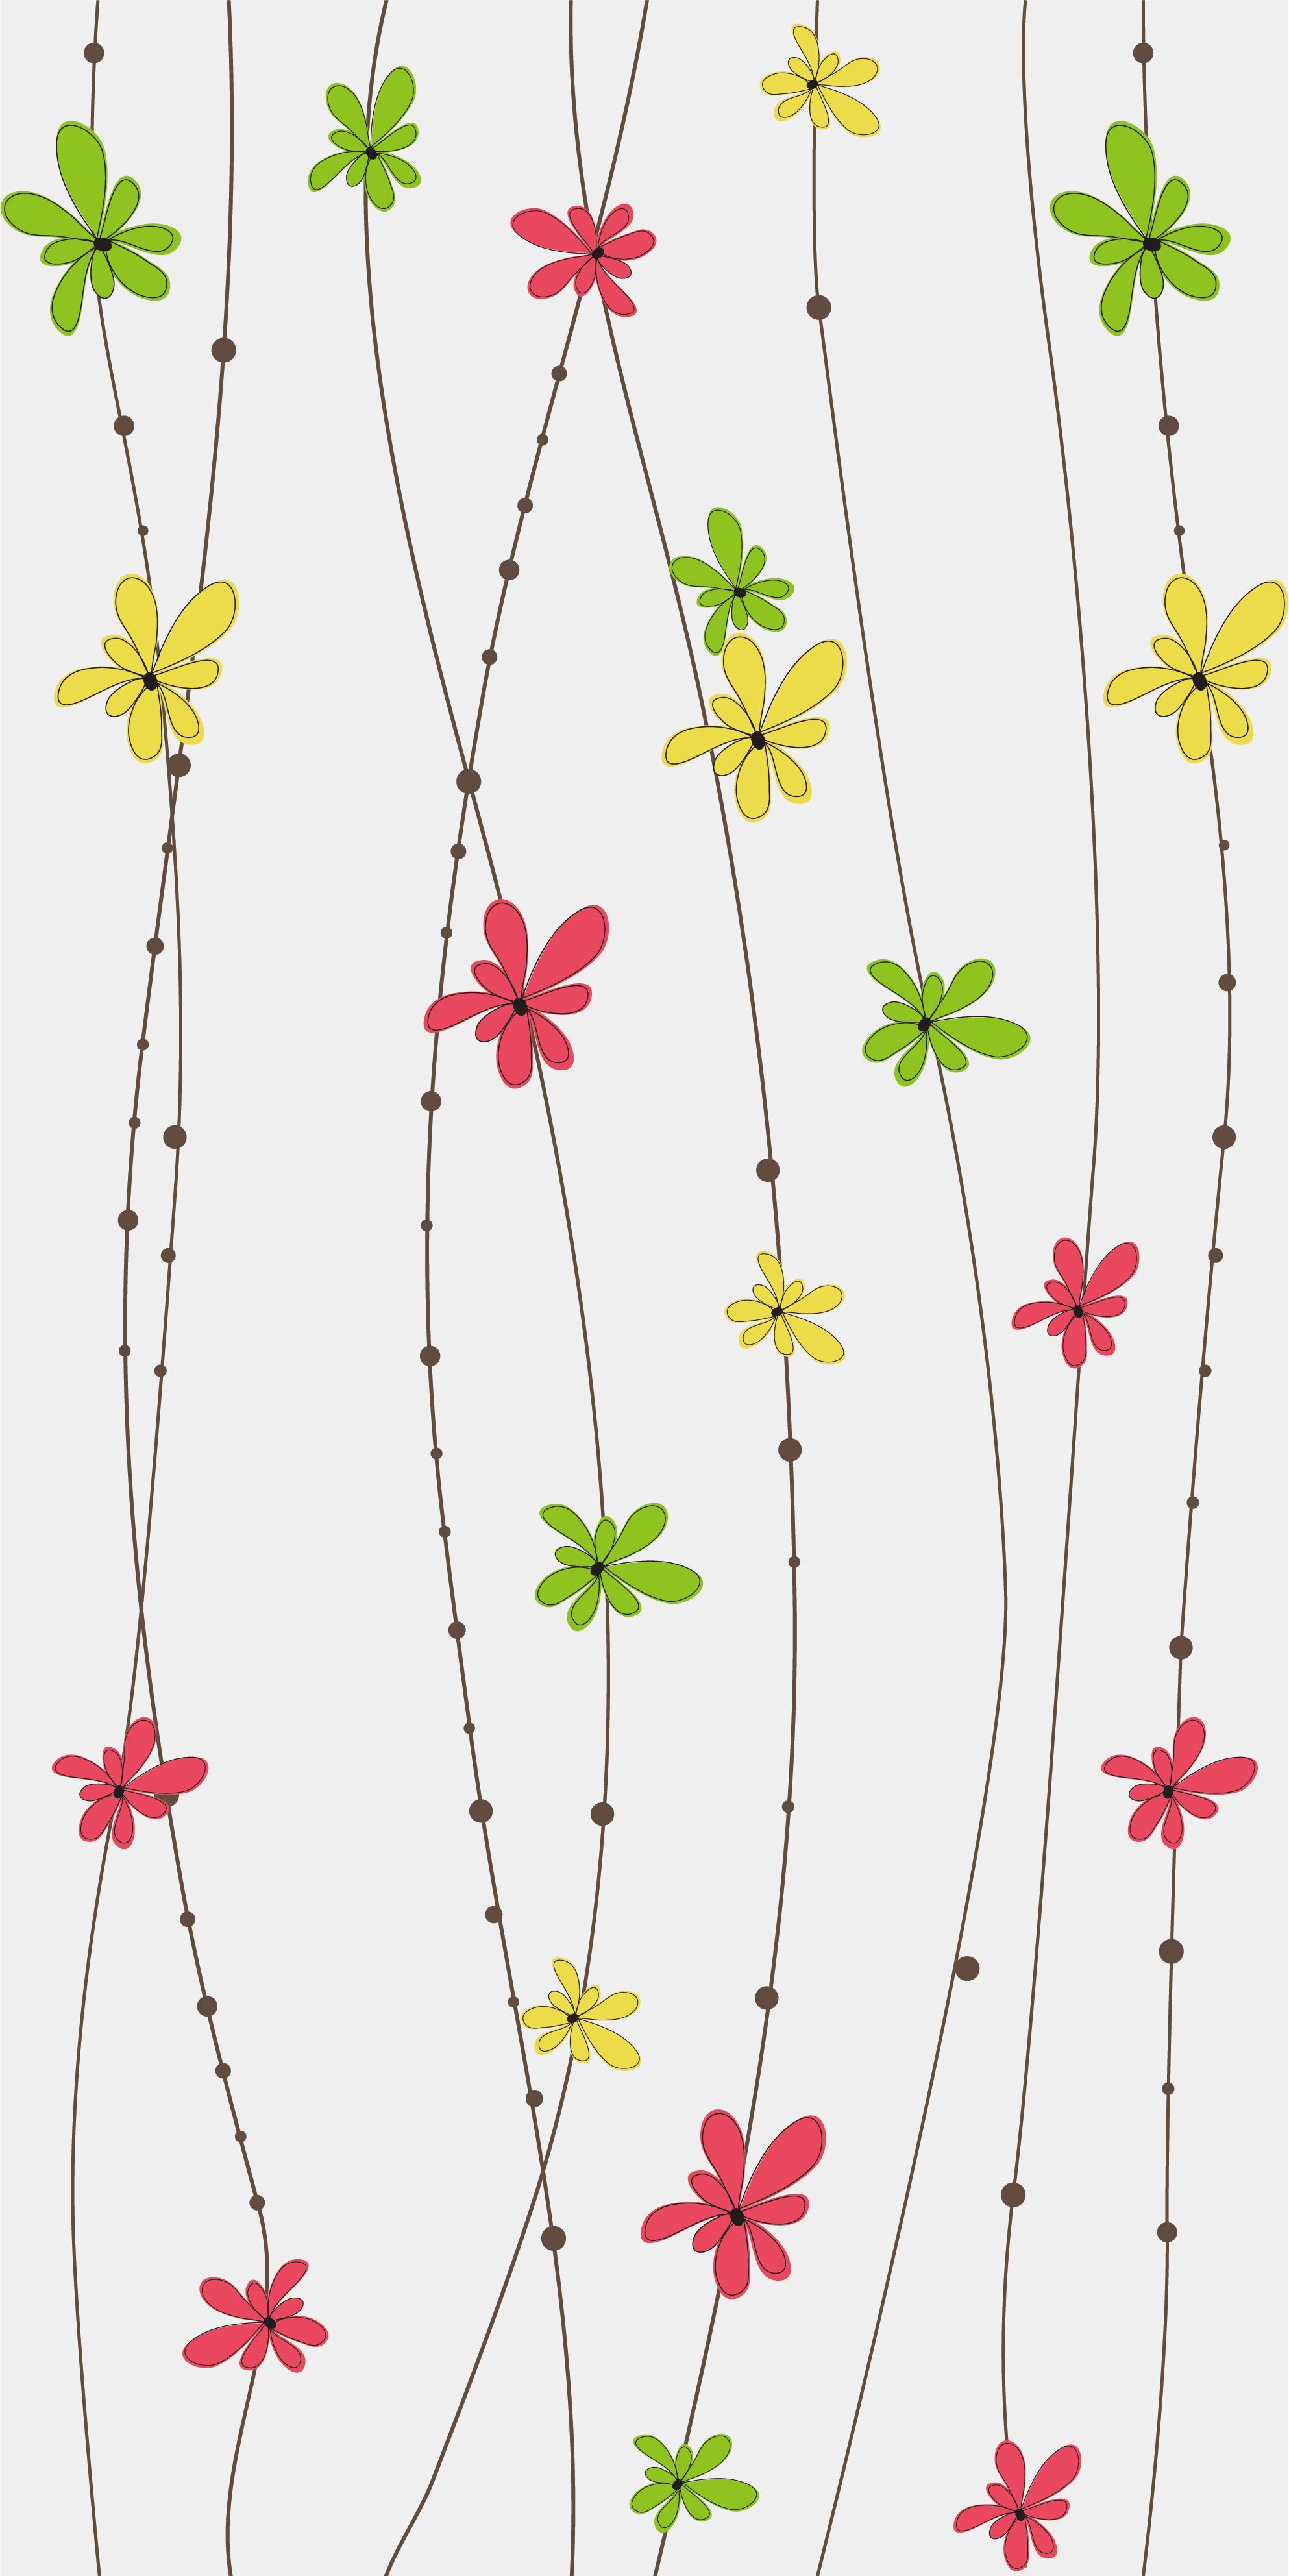 Daisy Chain Wallpaper. Spider Chain